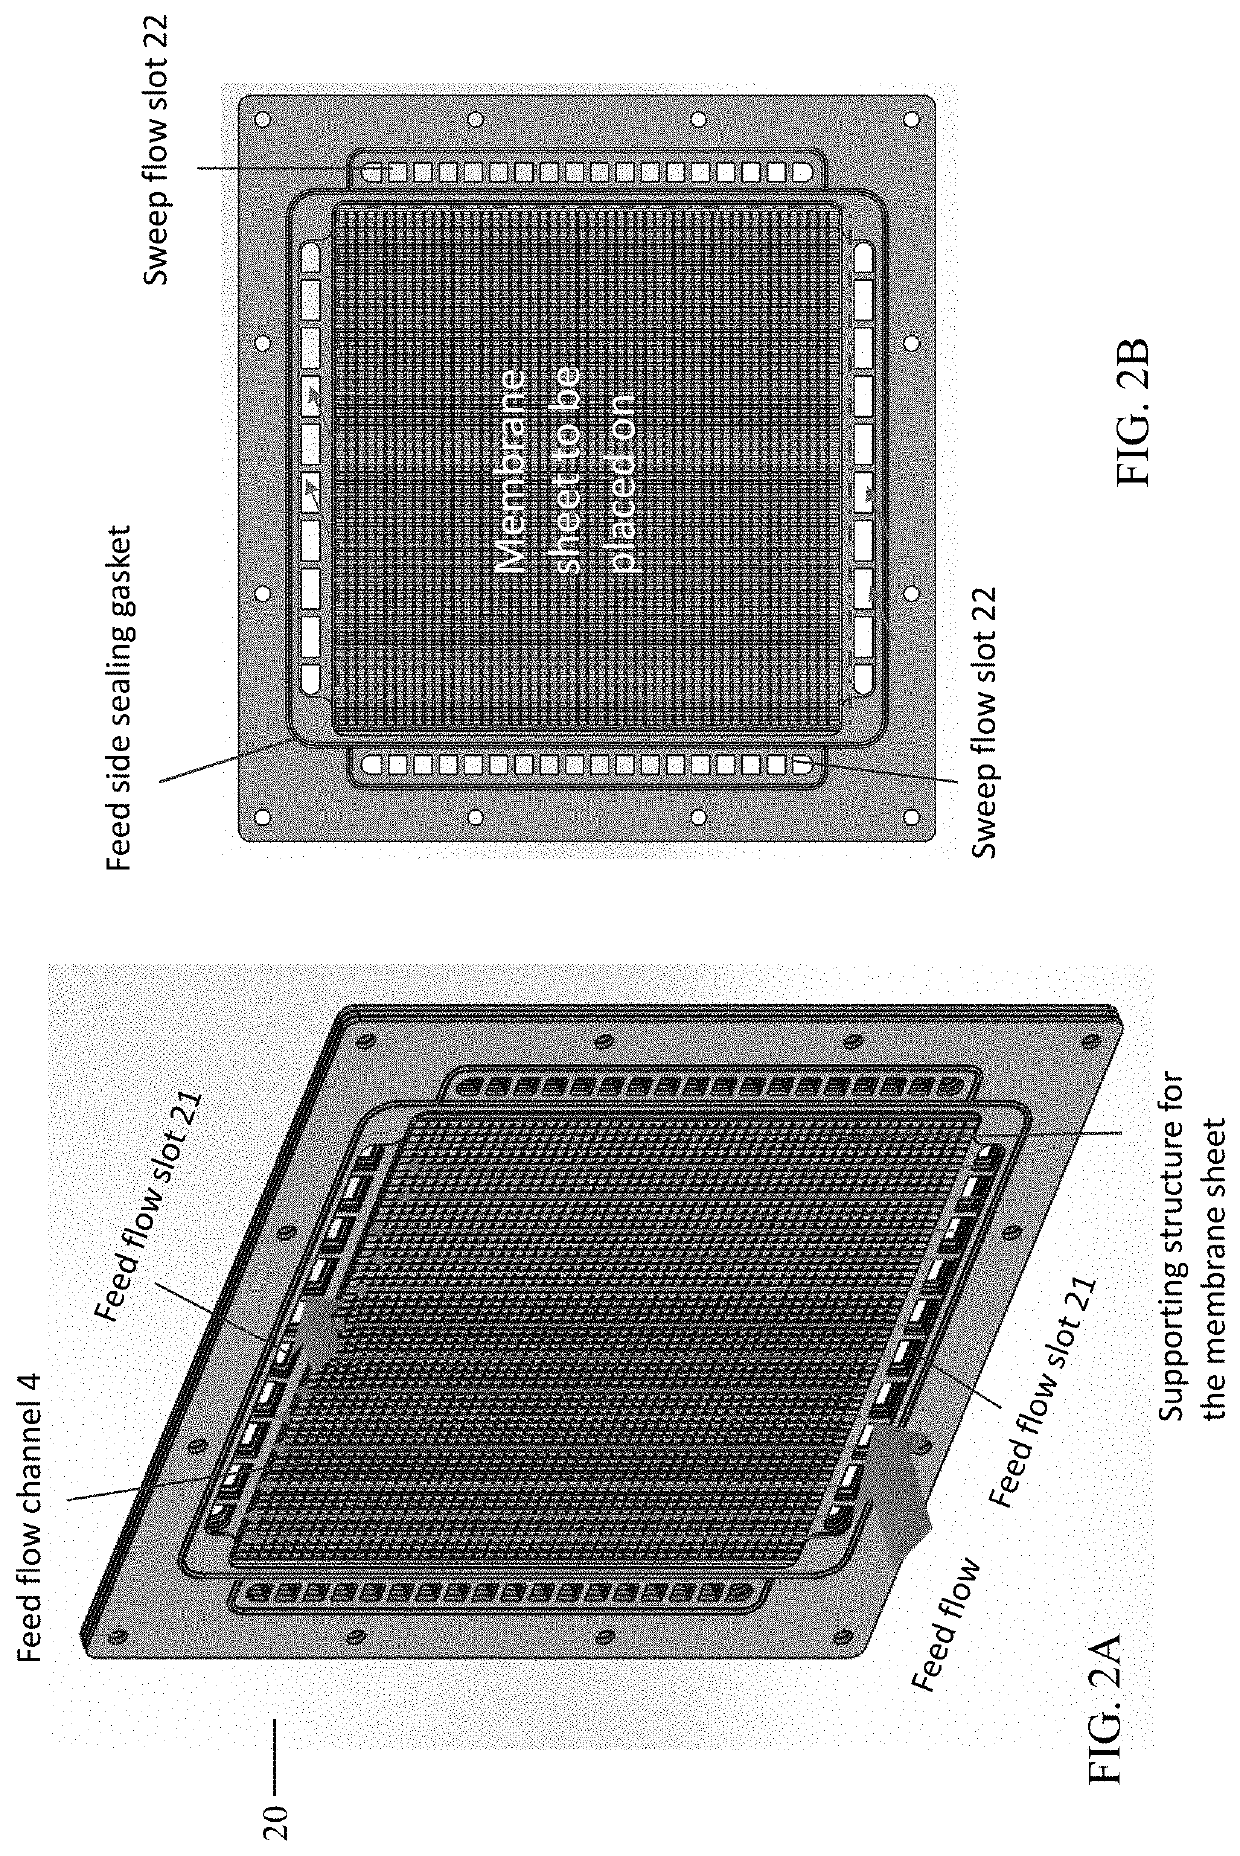 Universal Planar Membrane Device for Mass Transfer